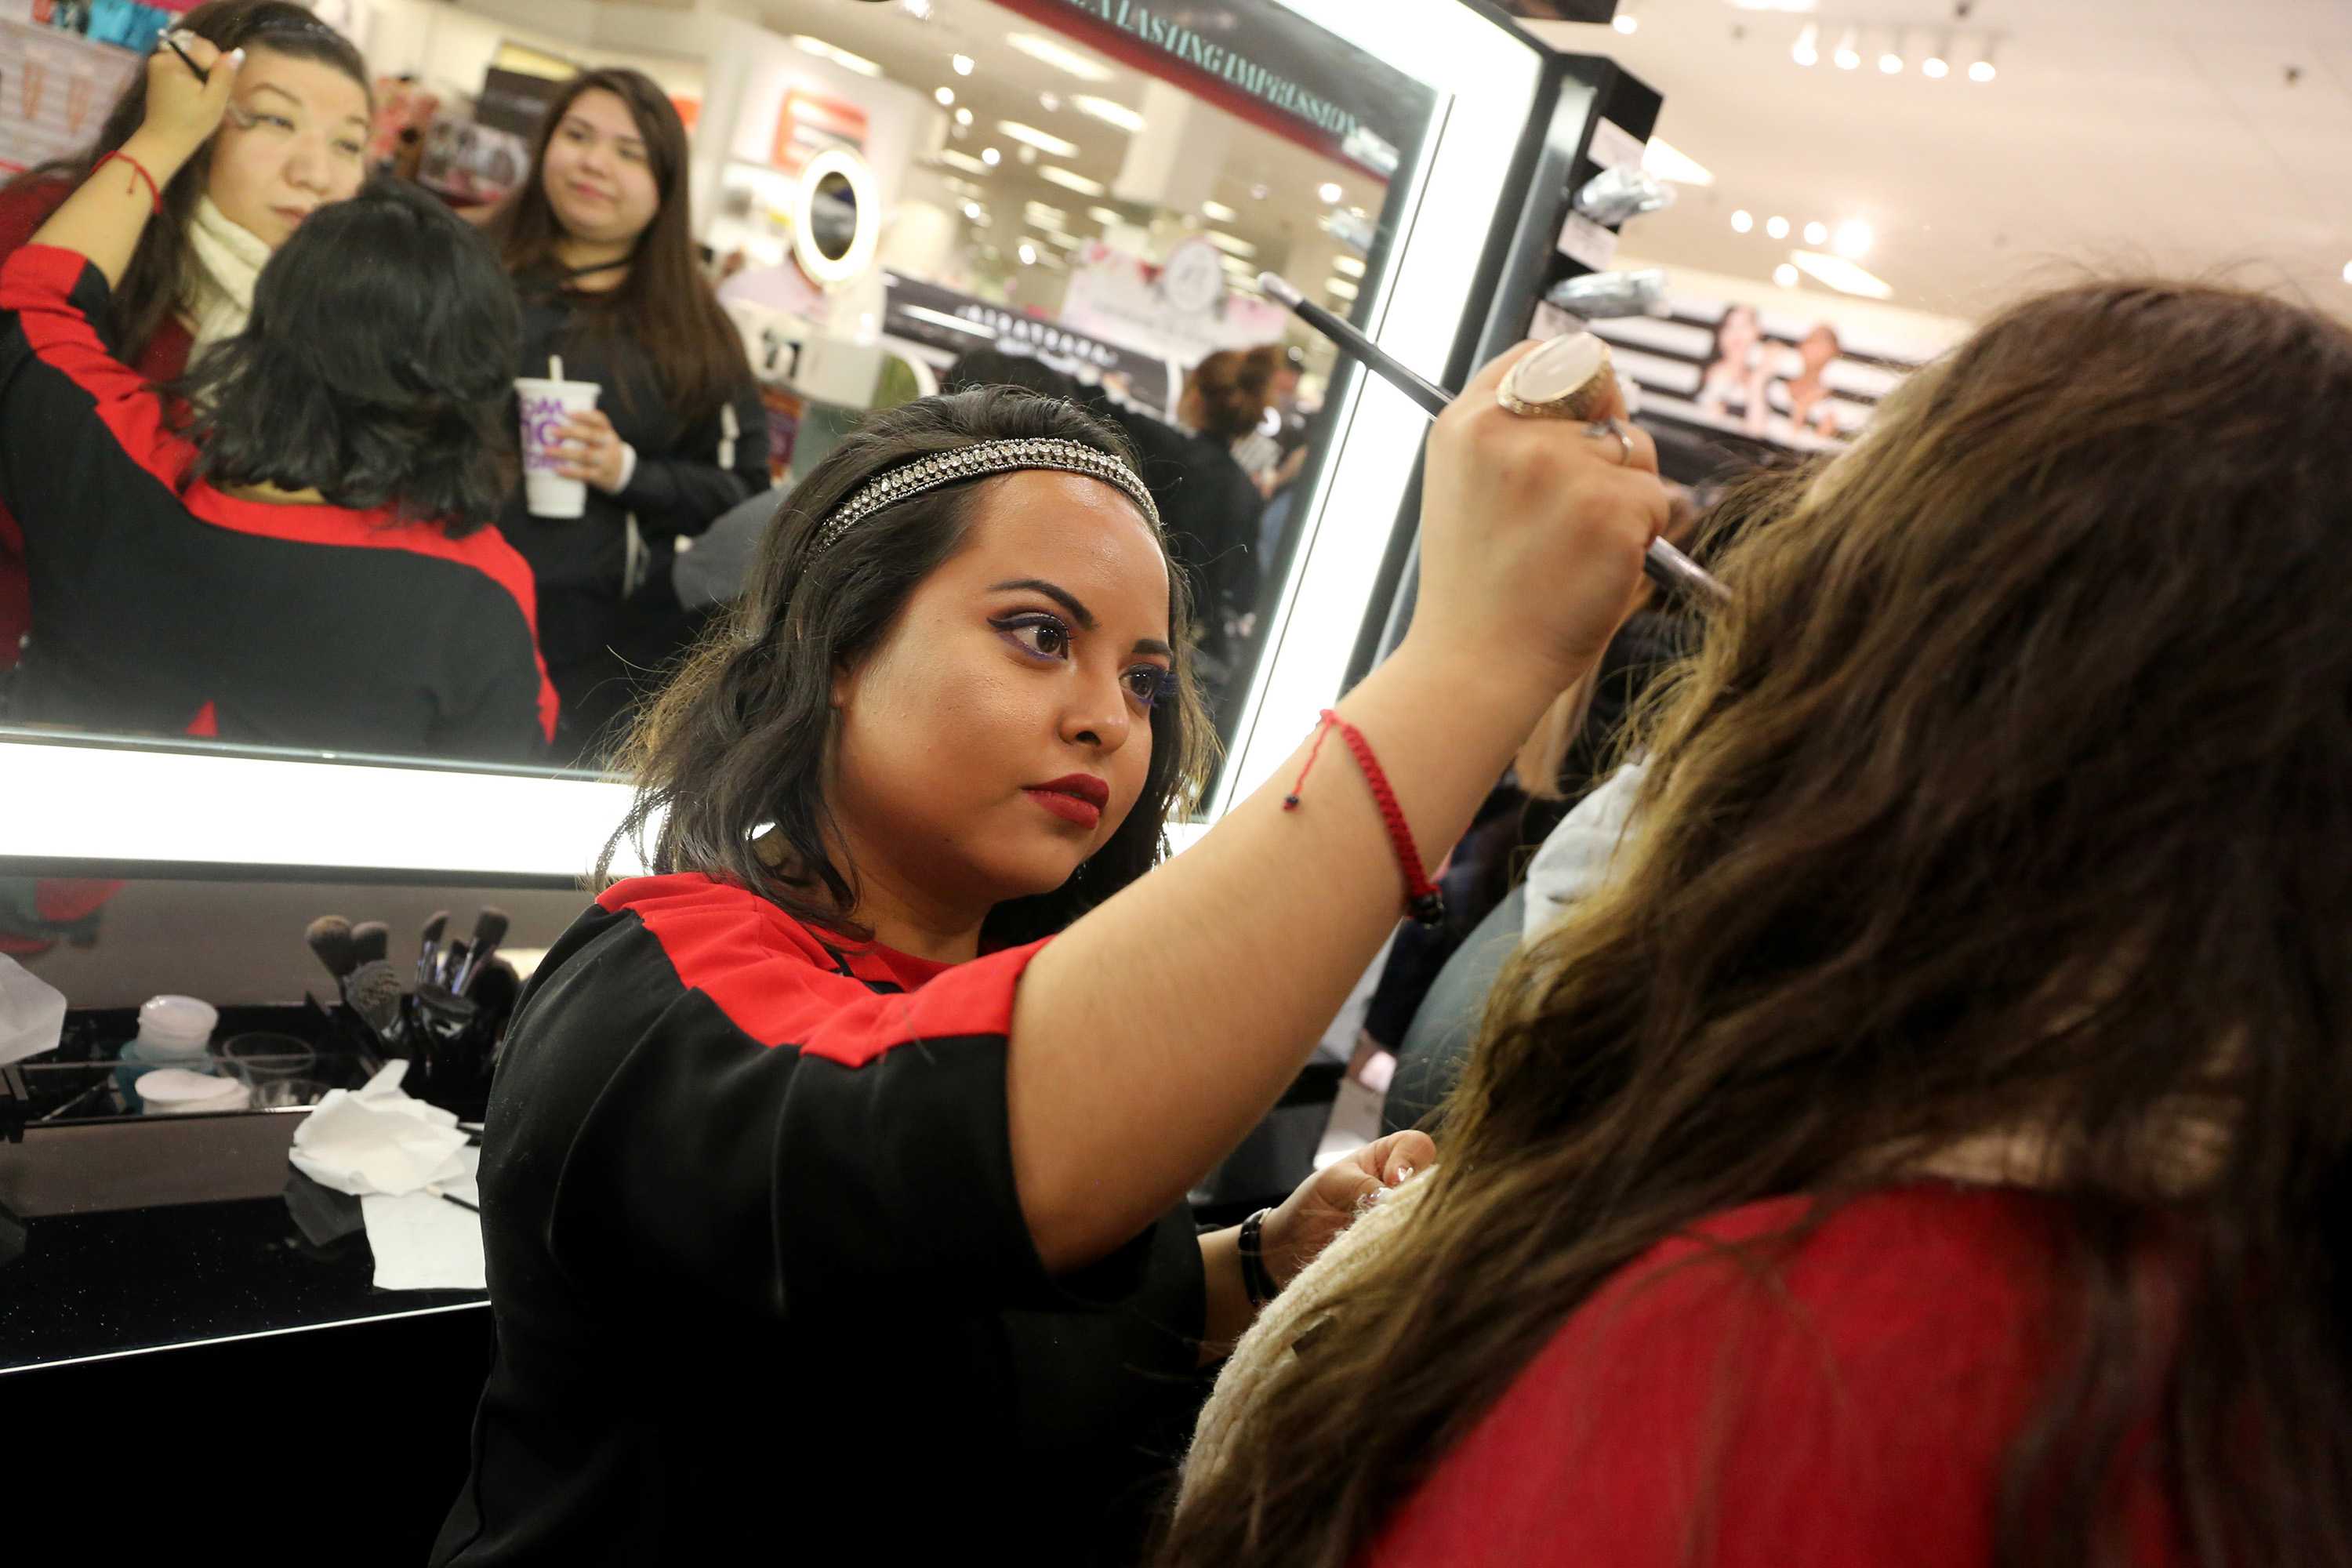 Sephora+employee+applies+makeup+on+customer